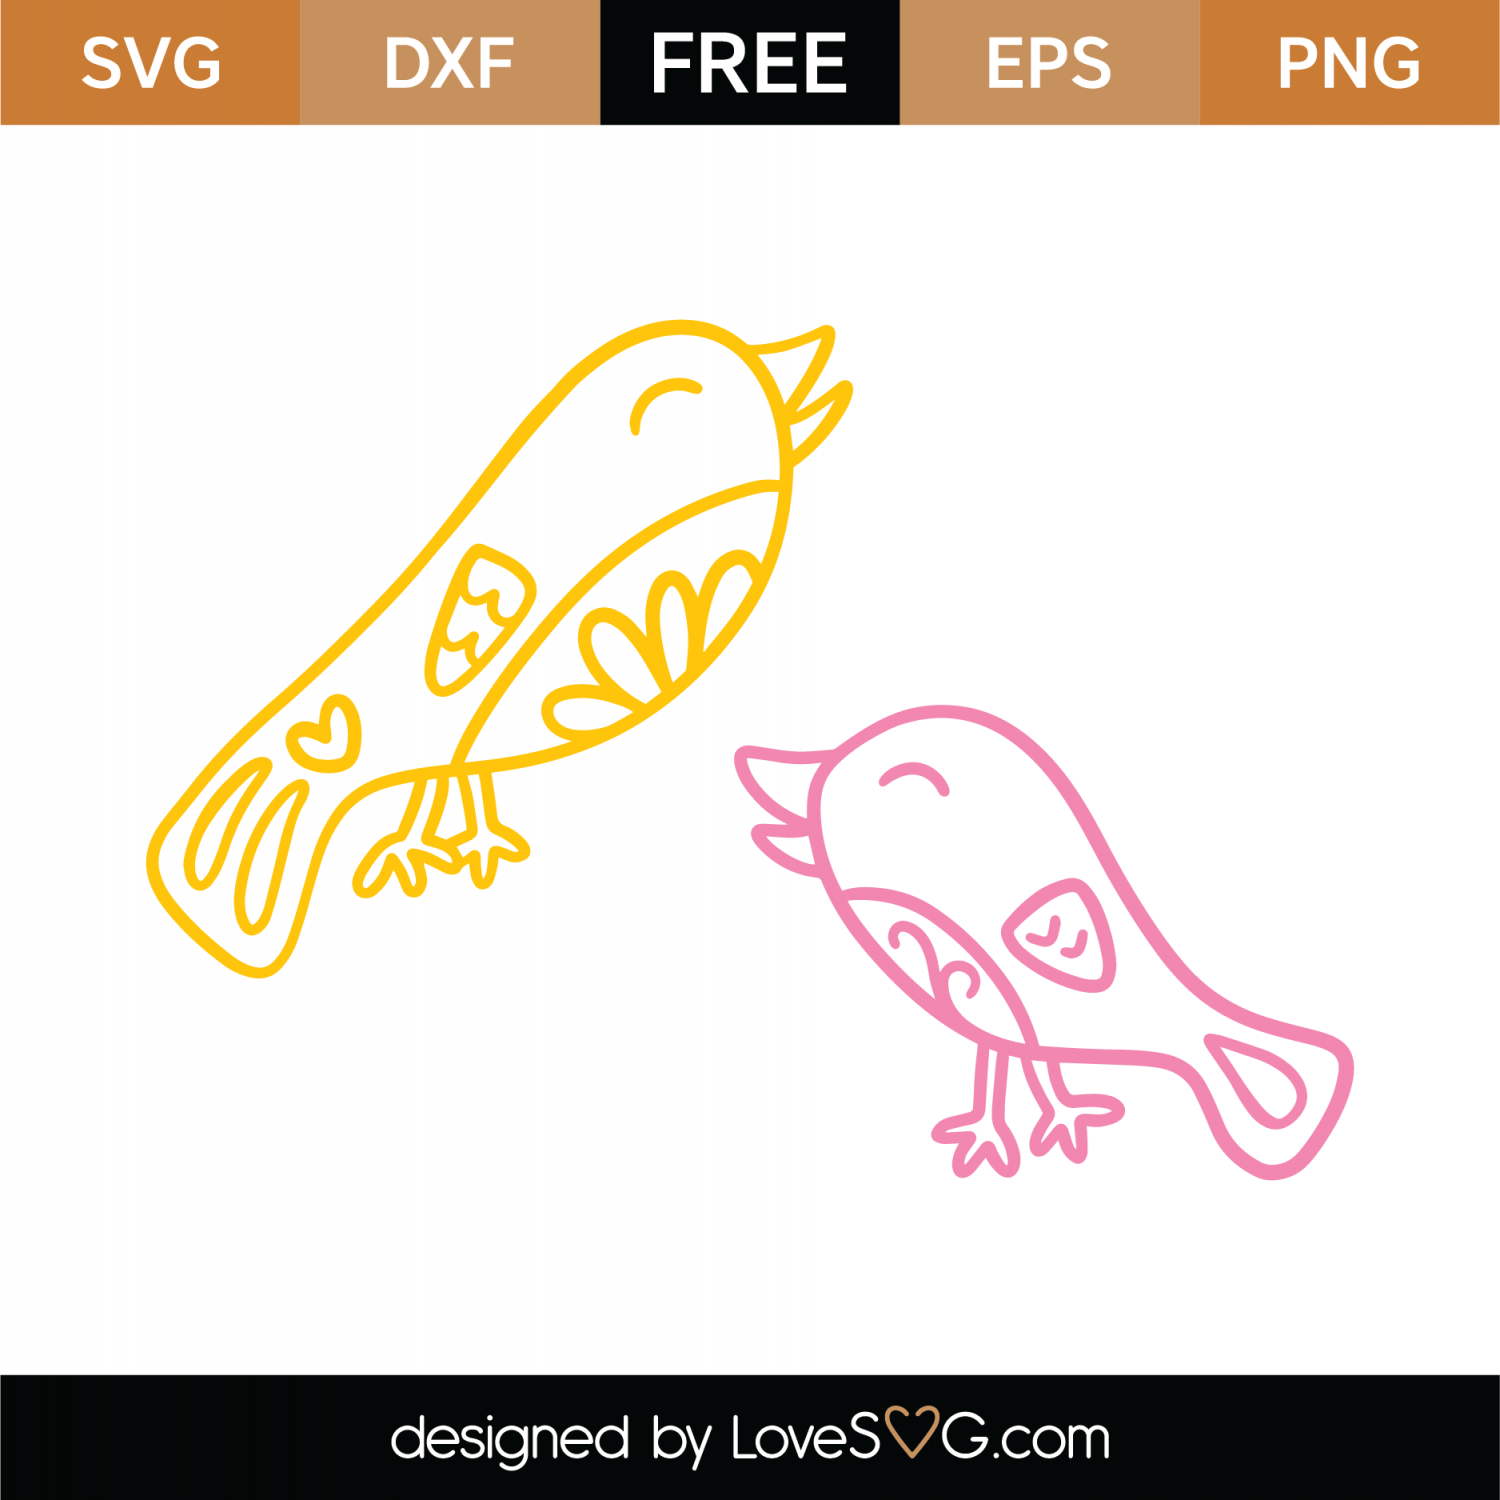 Download Free Birds SVG Cut File | Lovesvg.com